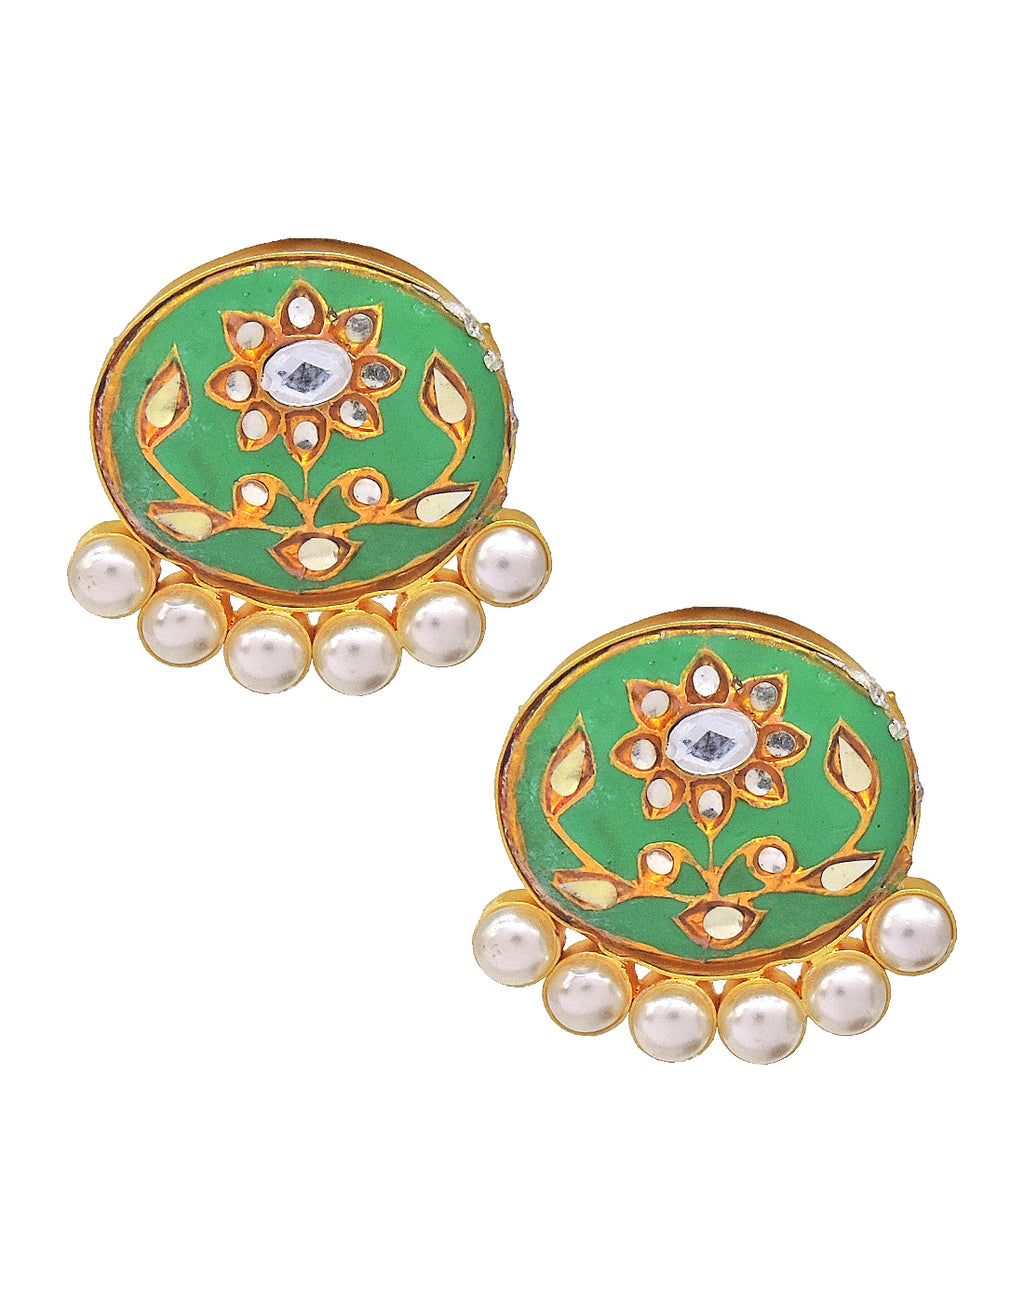 Oval Kundan & Pearl Earrings - Statement Earrings - Gold-Plated & Hypoallergenic - Made in India - Dubai Jewellery - Dori